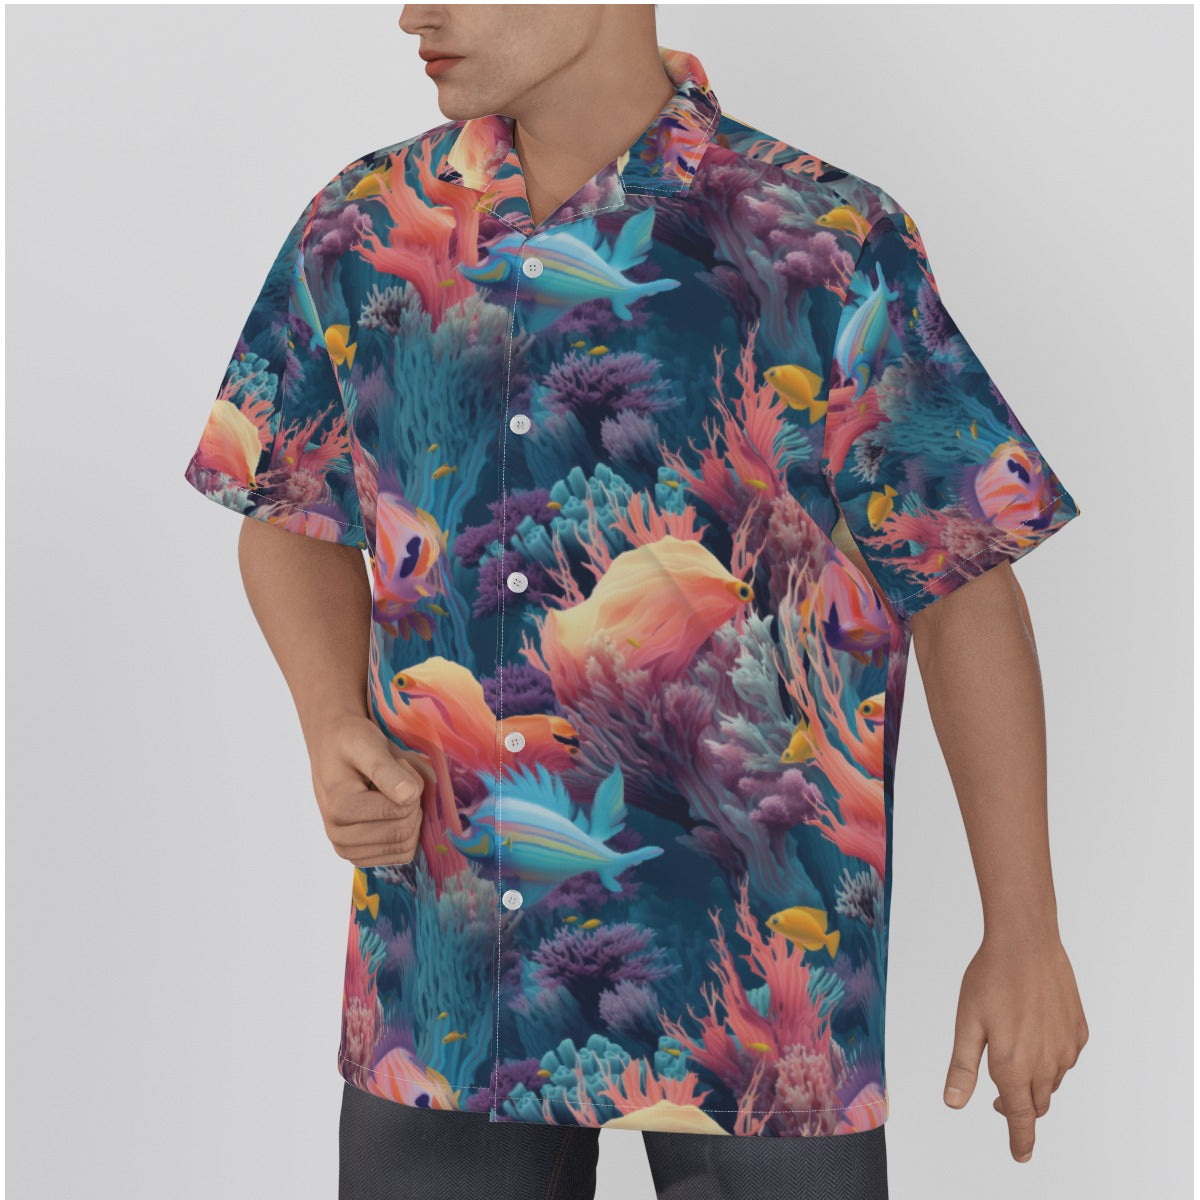 The Coral Reef Men's Hawaiian Shirt